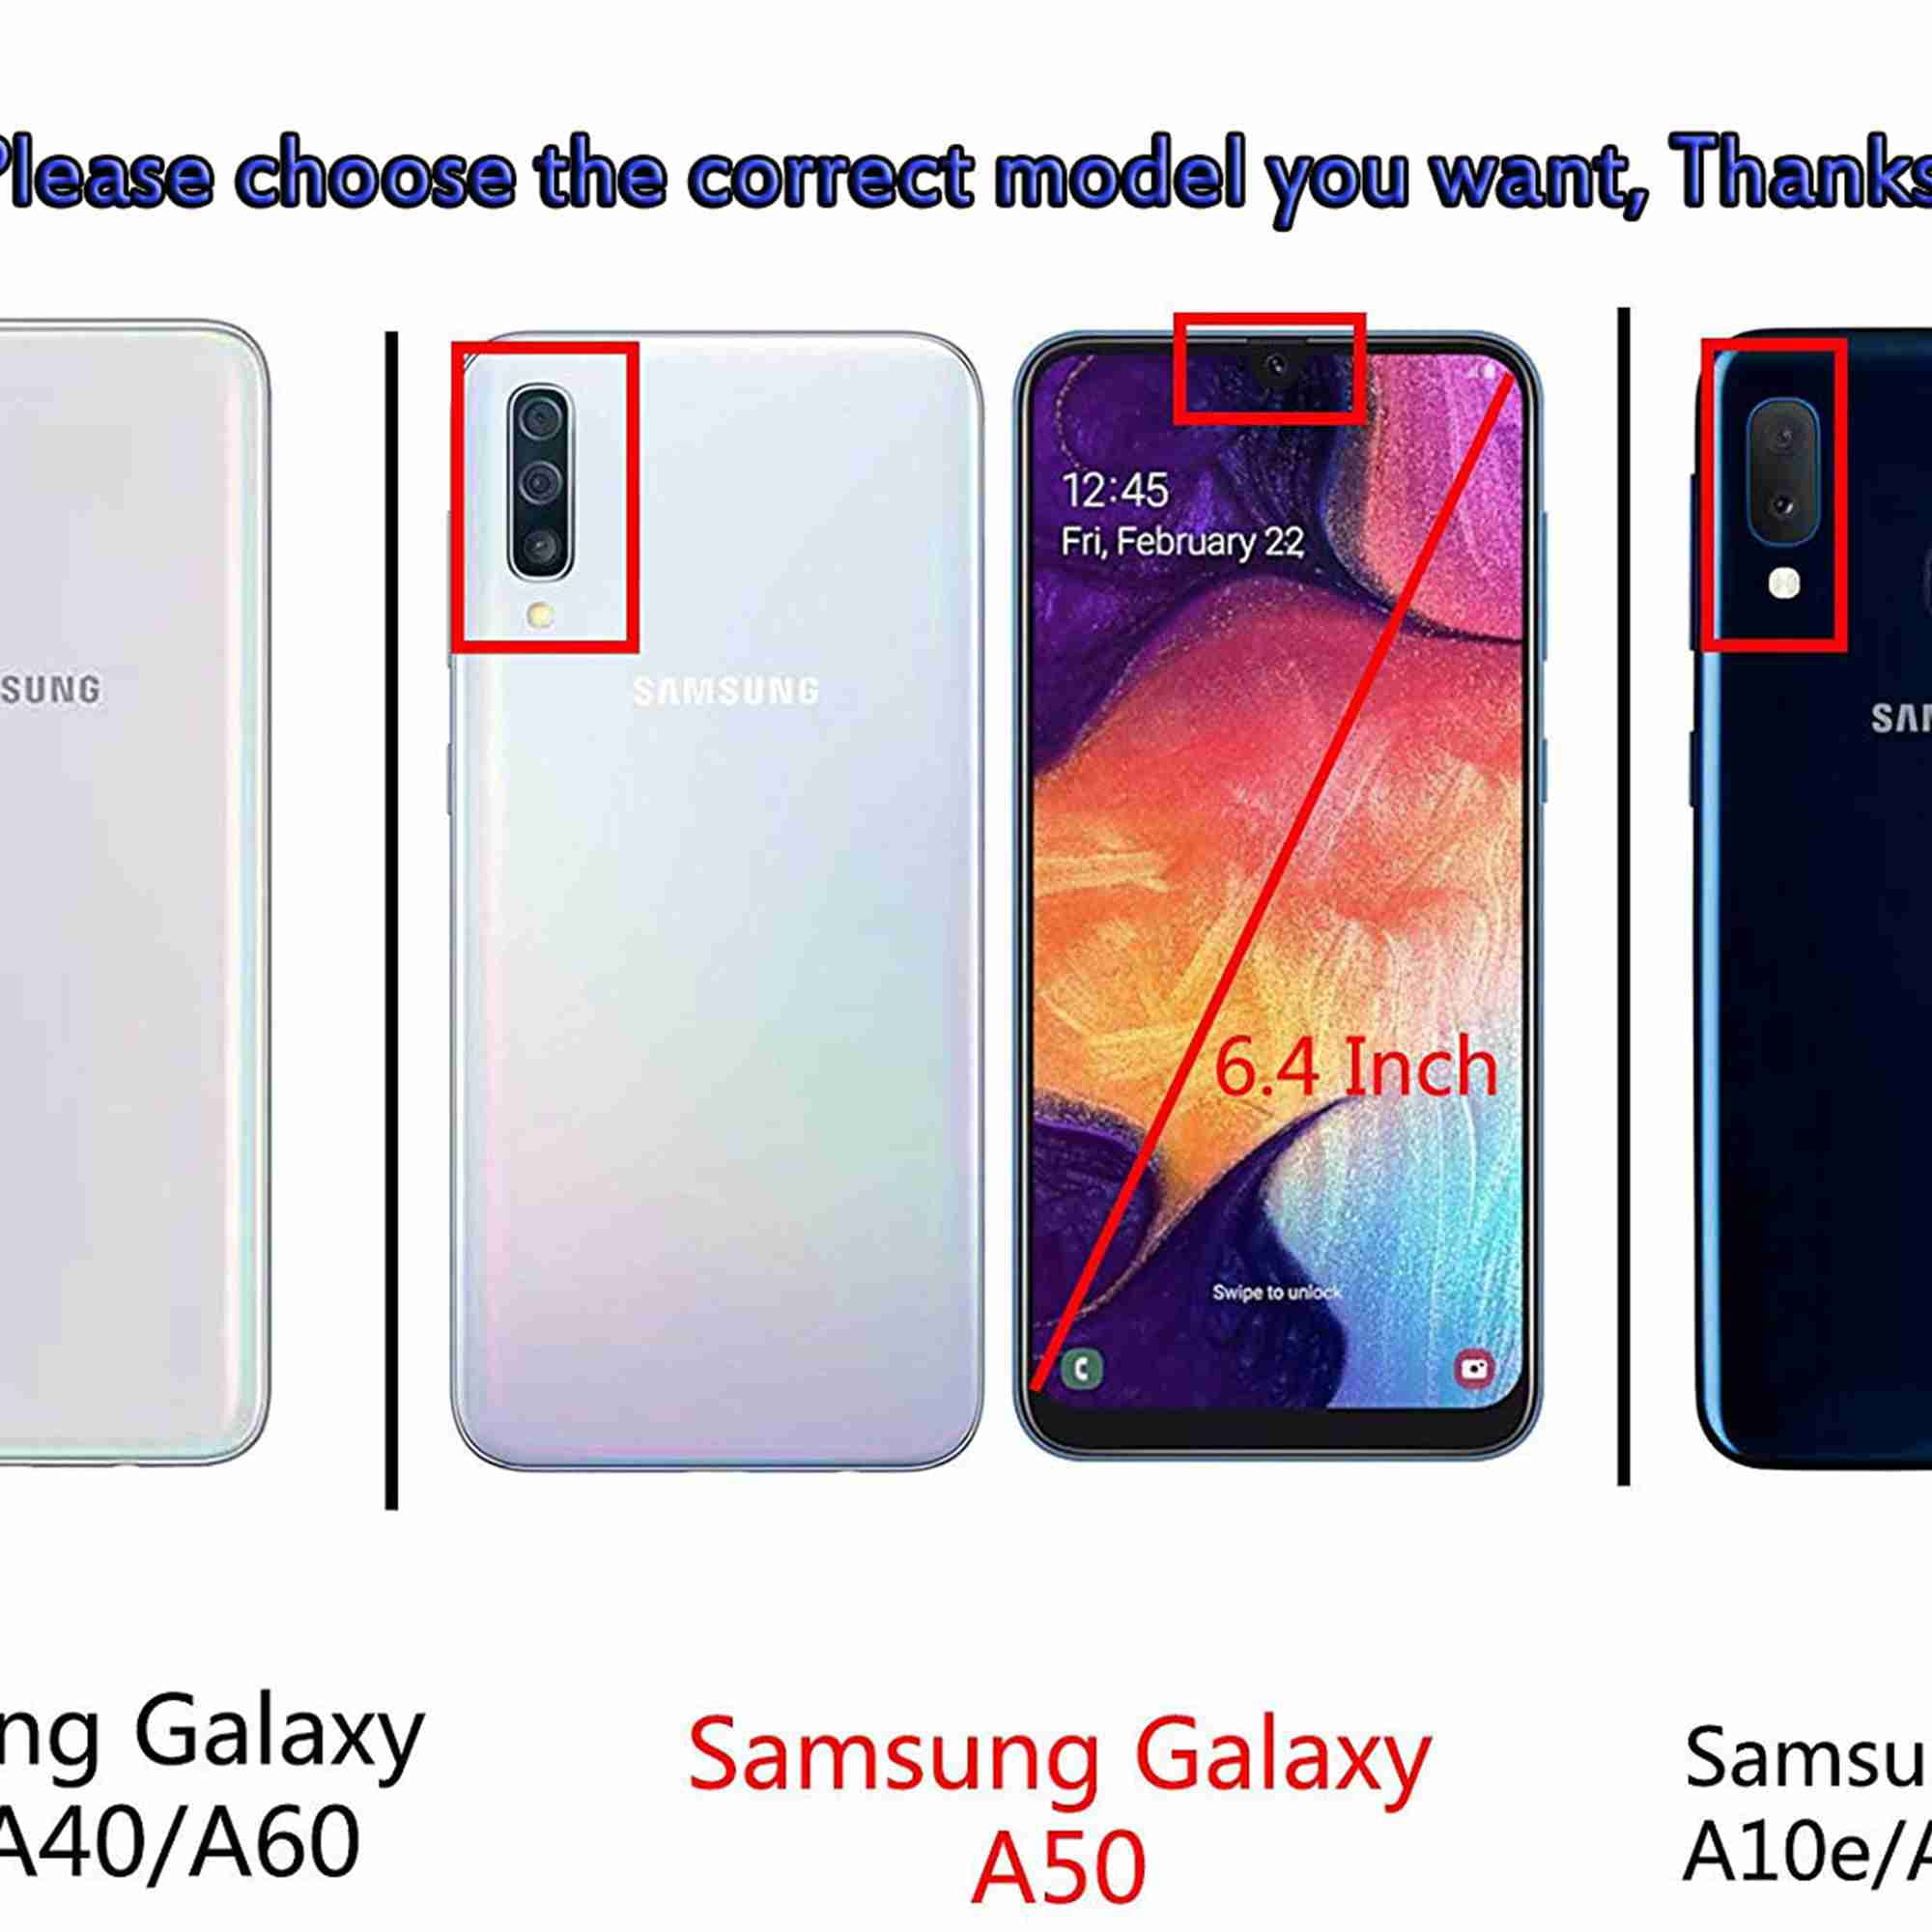 Handyhülle Samsung Galaxy A50 Glitzer Paillette Plating Muster TPU Silikon Rot PC Plastik Bumper Schale Kratzfest Case Cover Tasche Etui Schutzhülle Hpory Kompatibel mit Galaxy A50 Hülle 